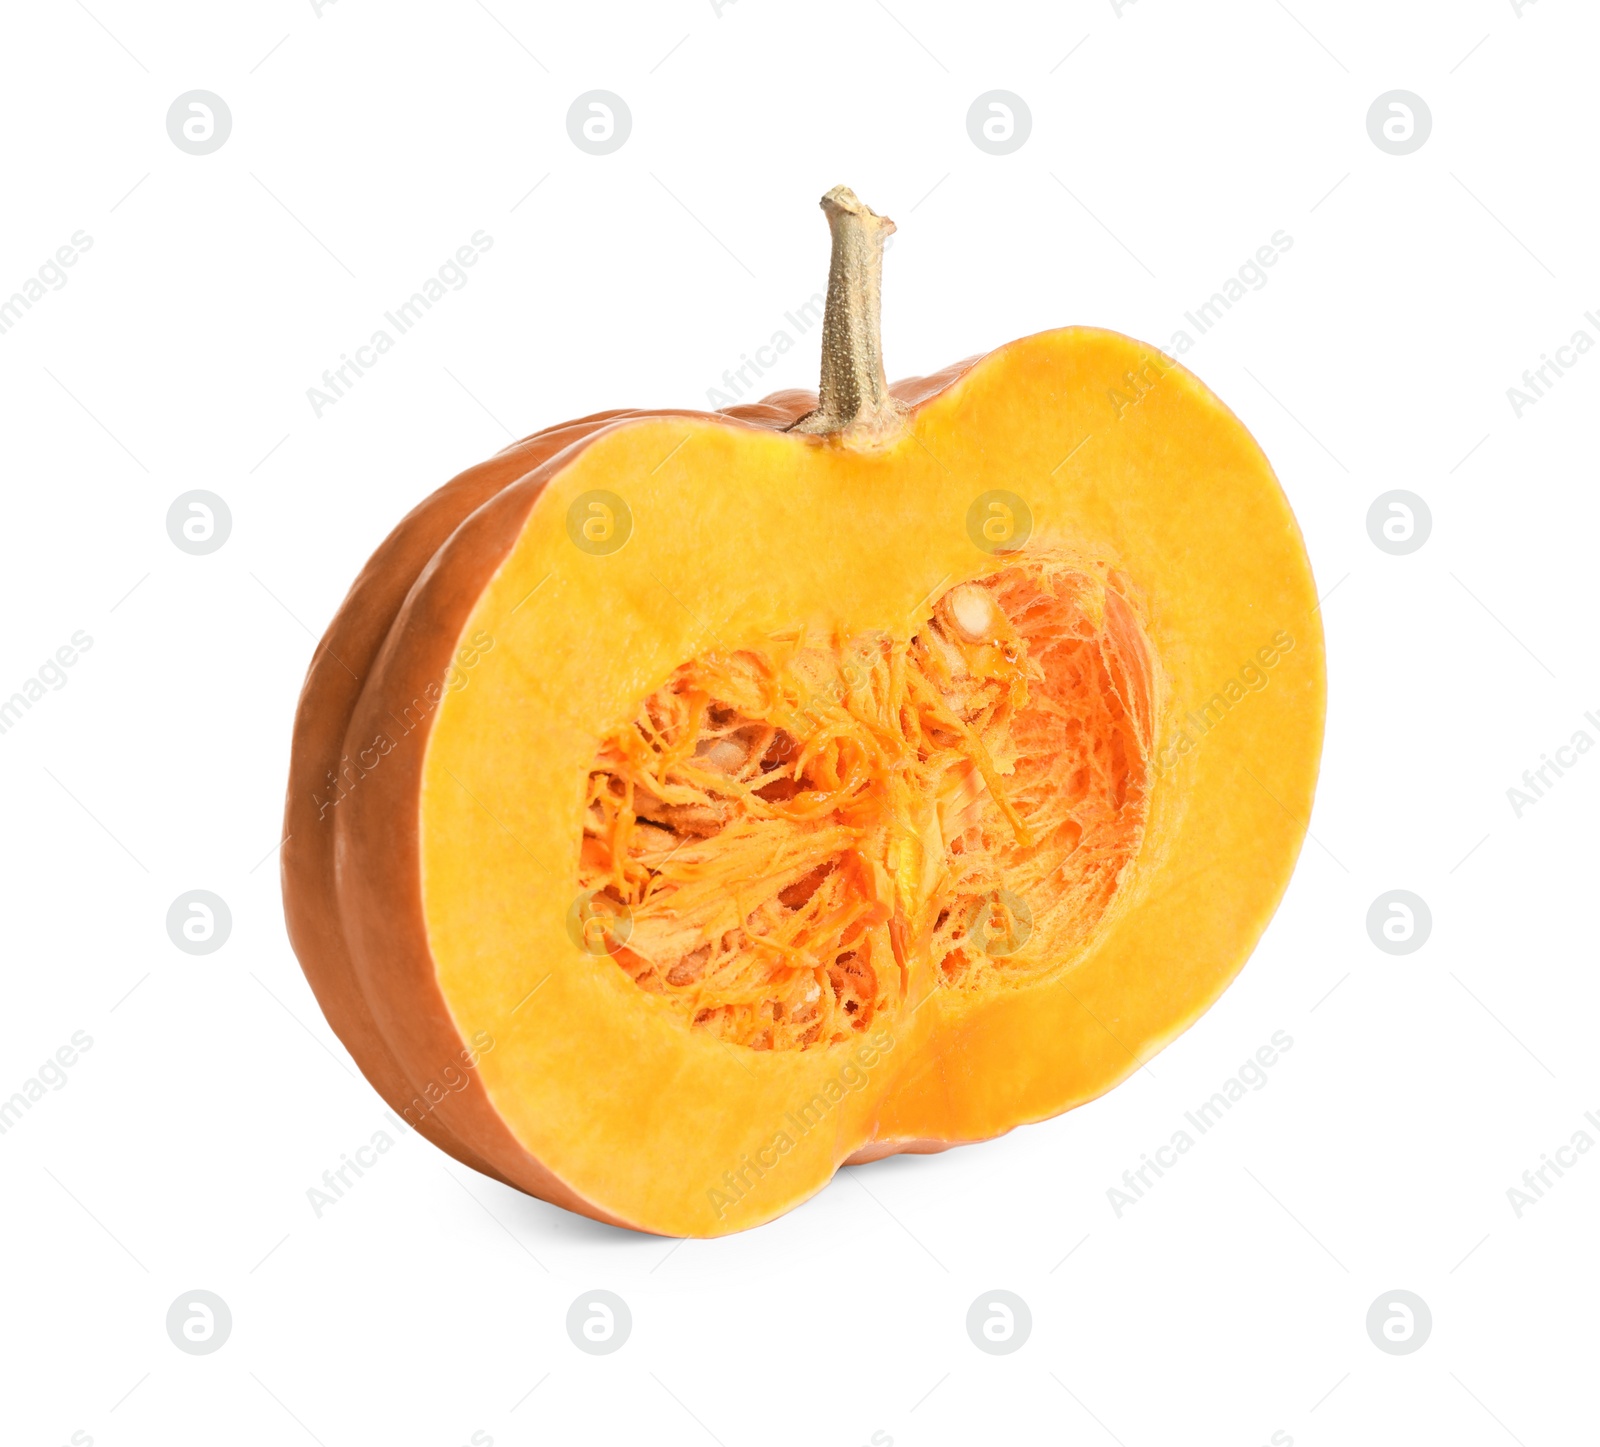 Photo of Half of ripe orange pumpkin isolated on white